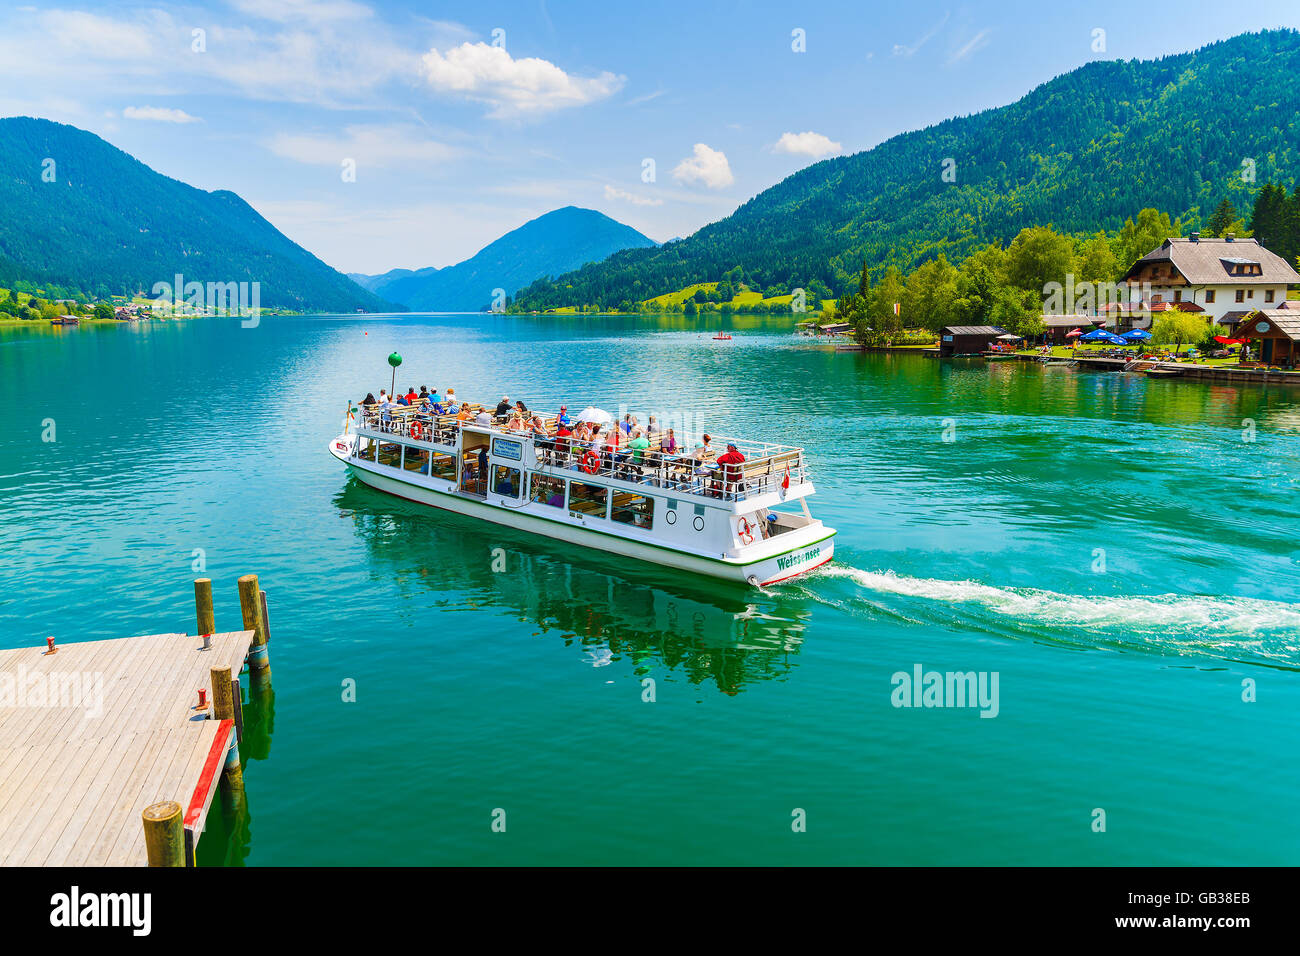 WEISSENSEE LAKE, AUSTRIA - JUL 6, 2015: tourist boat 'Weissensee' departing for a cruise around Weissensee lake in summer landsc Stock Photo